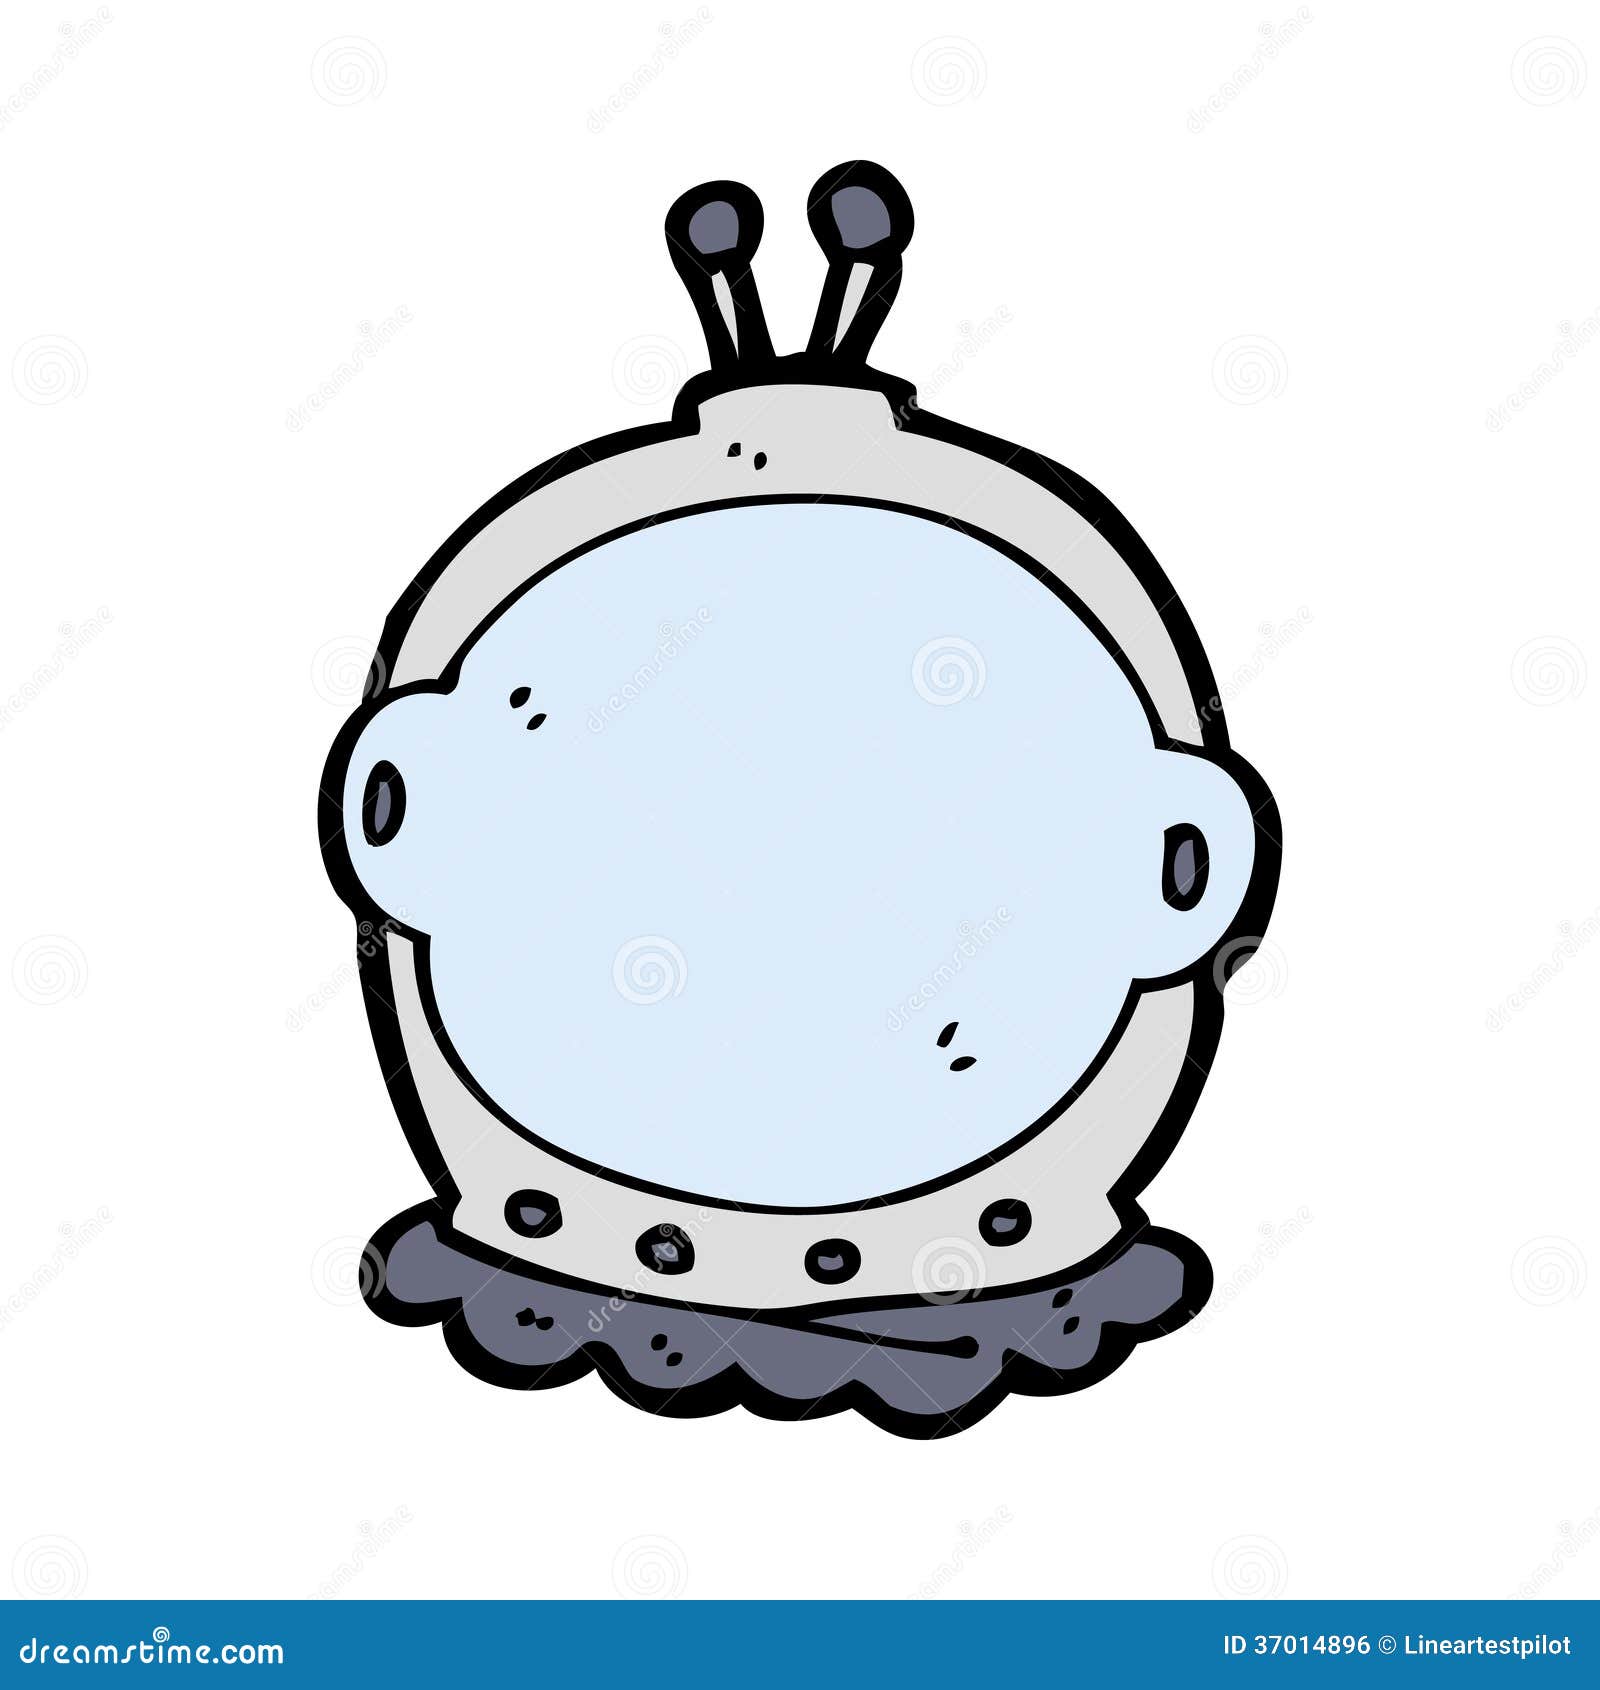 Cartoon Astronaut Helmet Royalty Free Stock Image - Image: 37014896